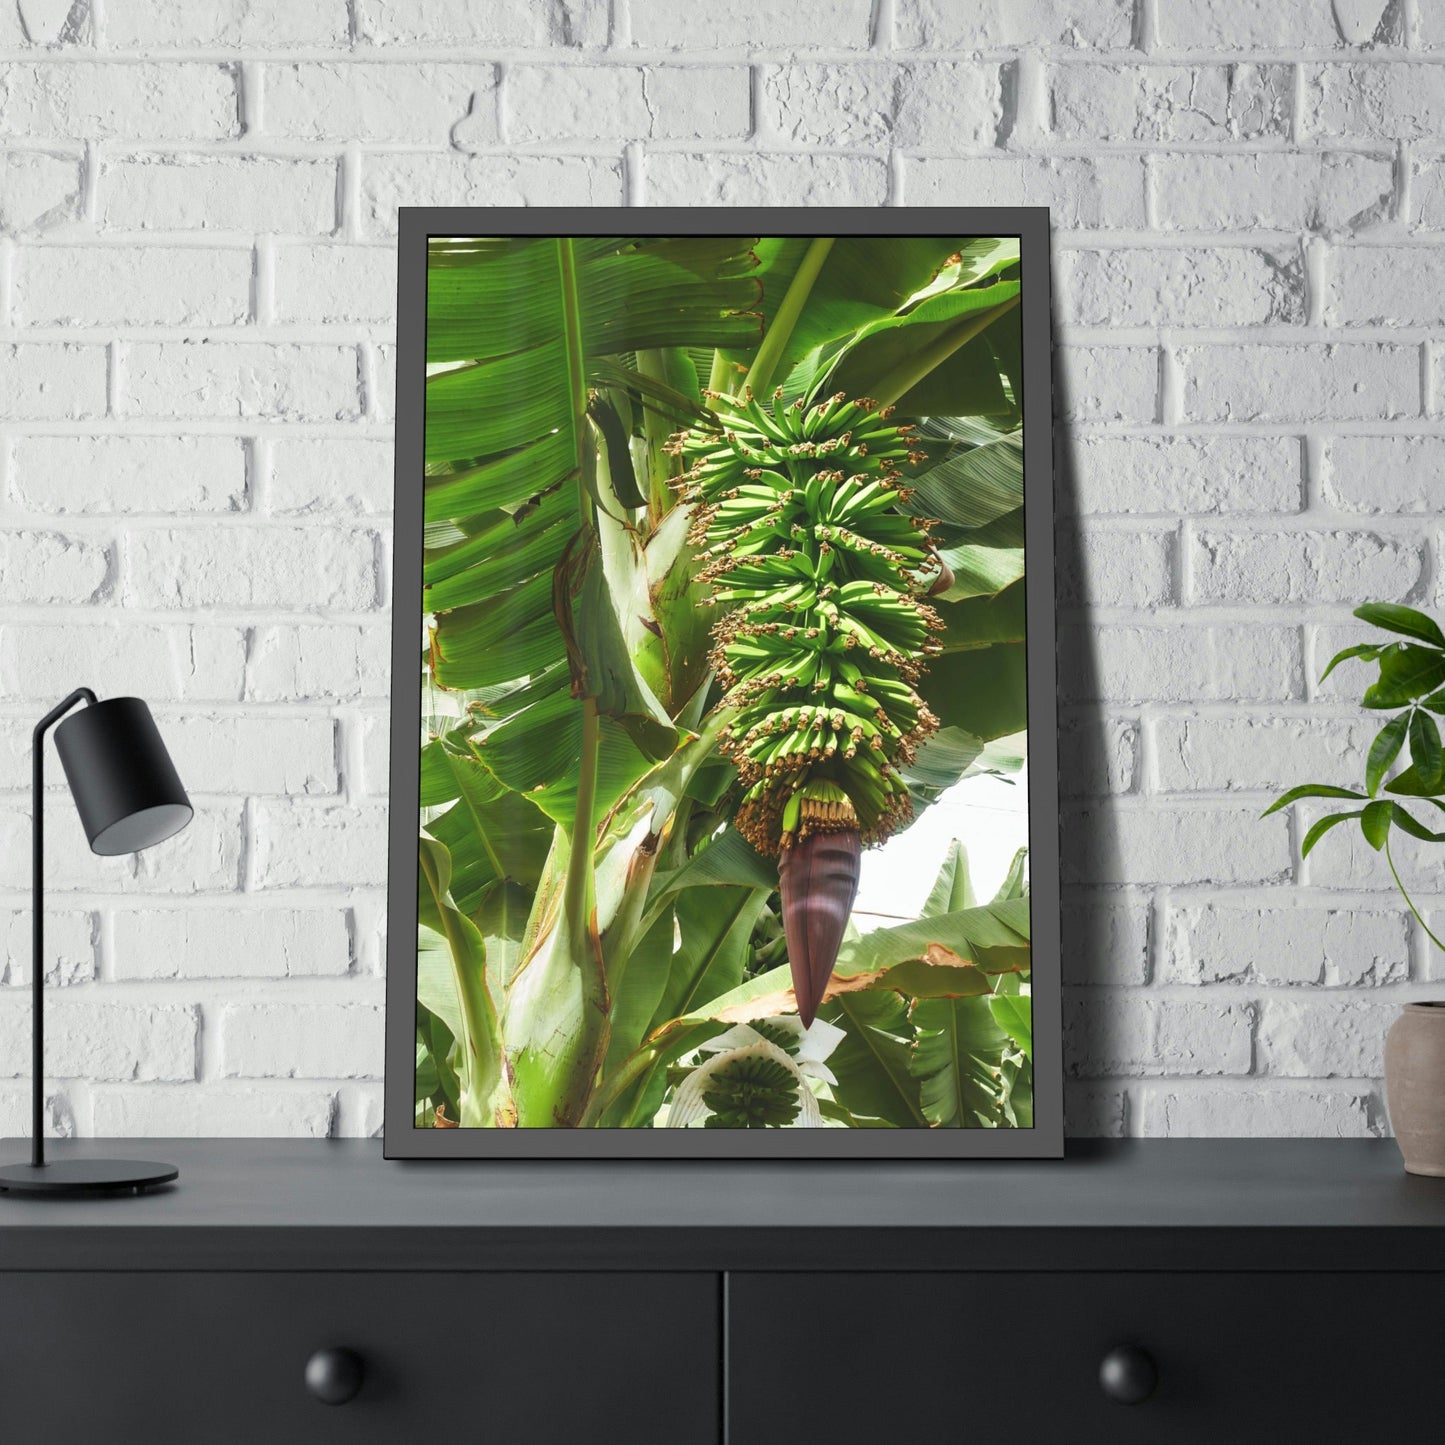 Tropics Calling: Canvas Art with Vibrant Banana Trees in a Jungle Setting